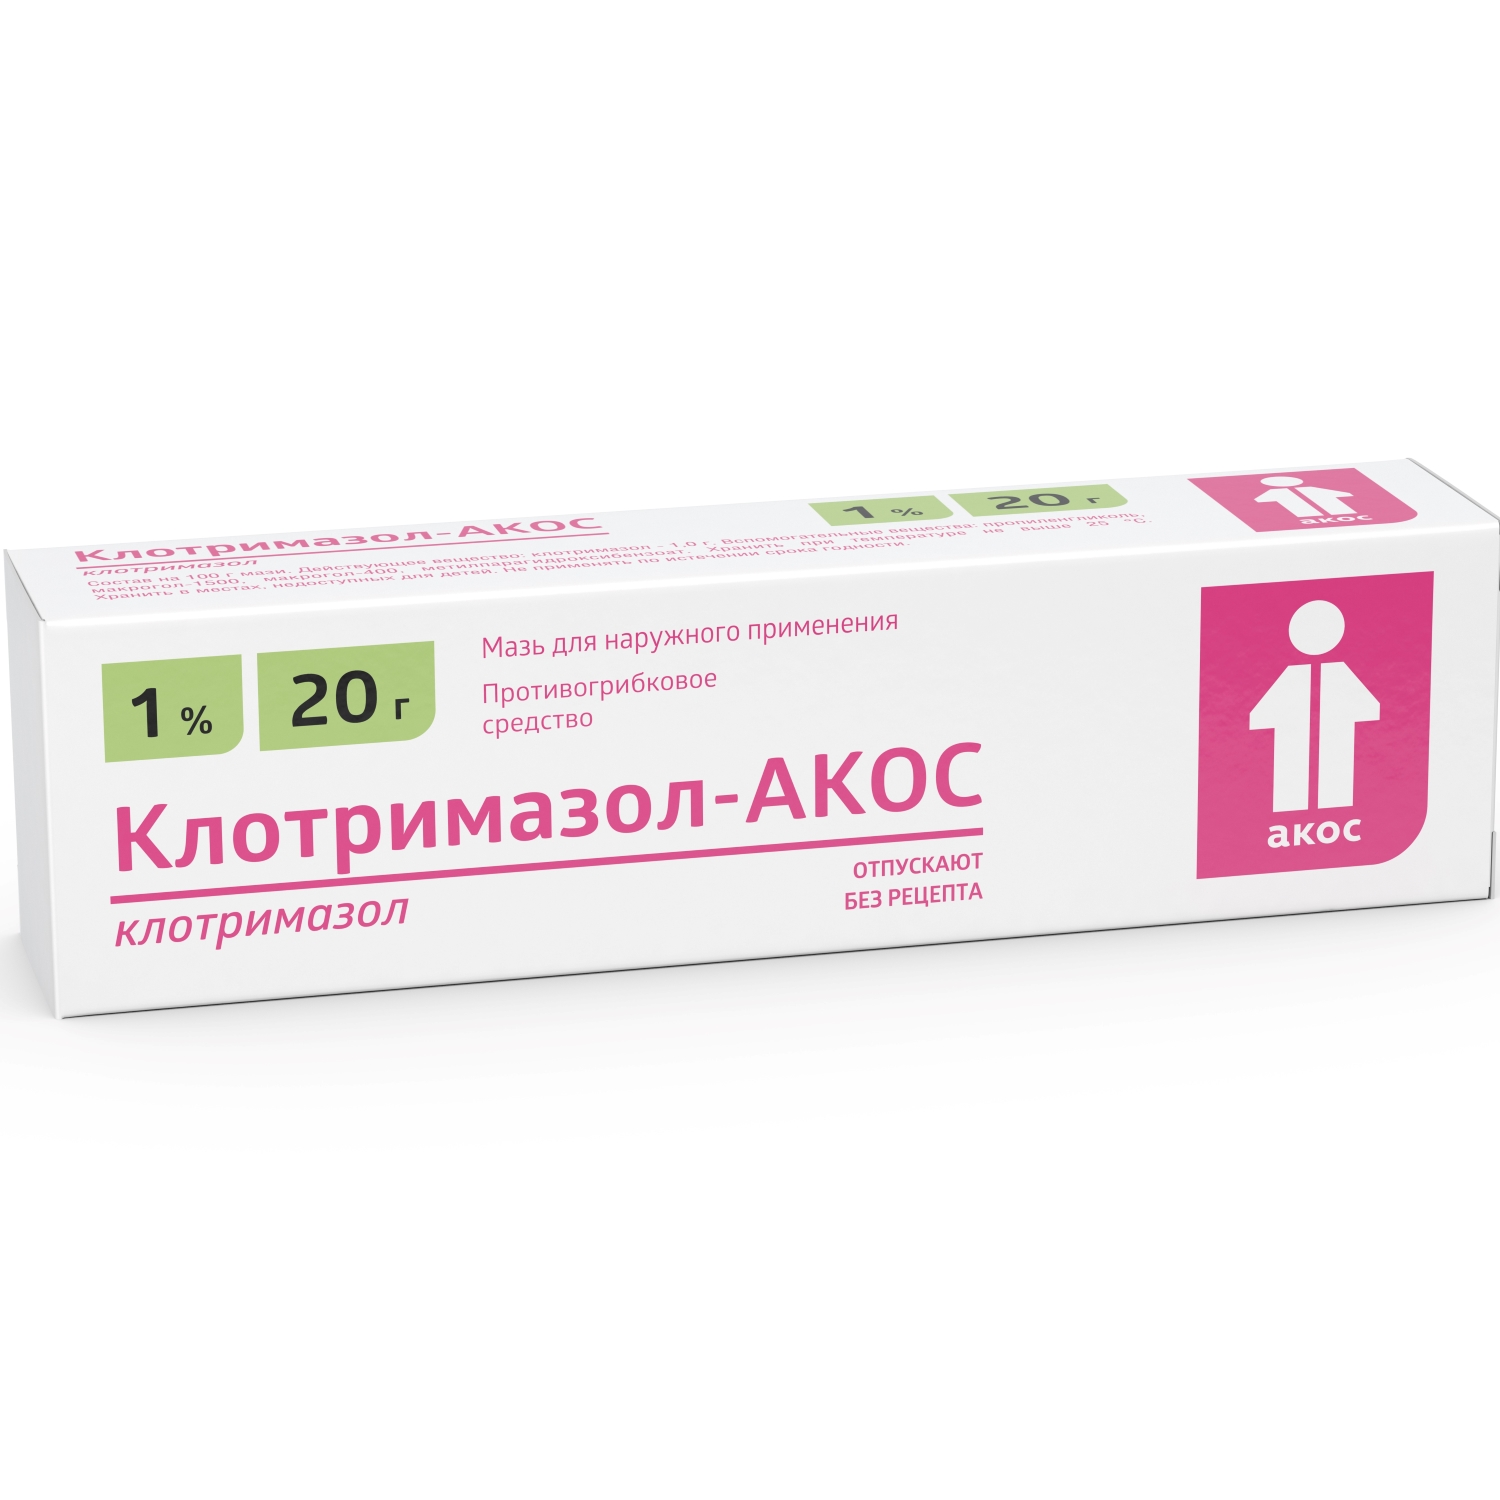 Клотримазол-АКОС мазь 1% 20г клотримазол акрихин мазь для наруж примен 1% 20г